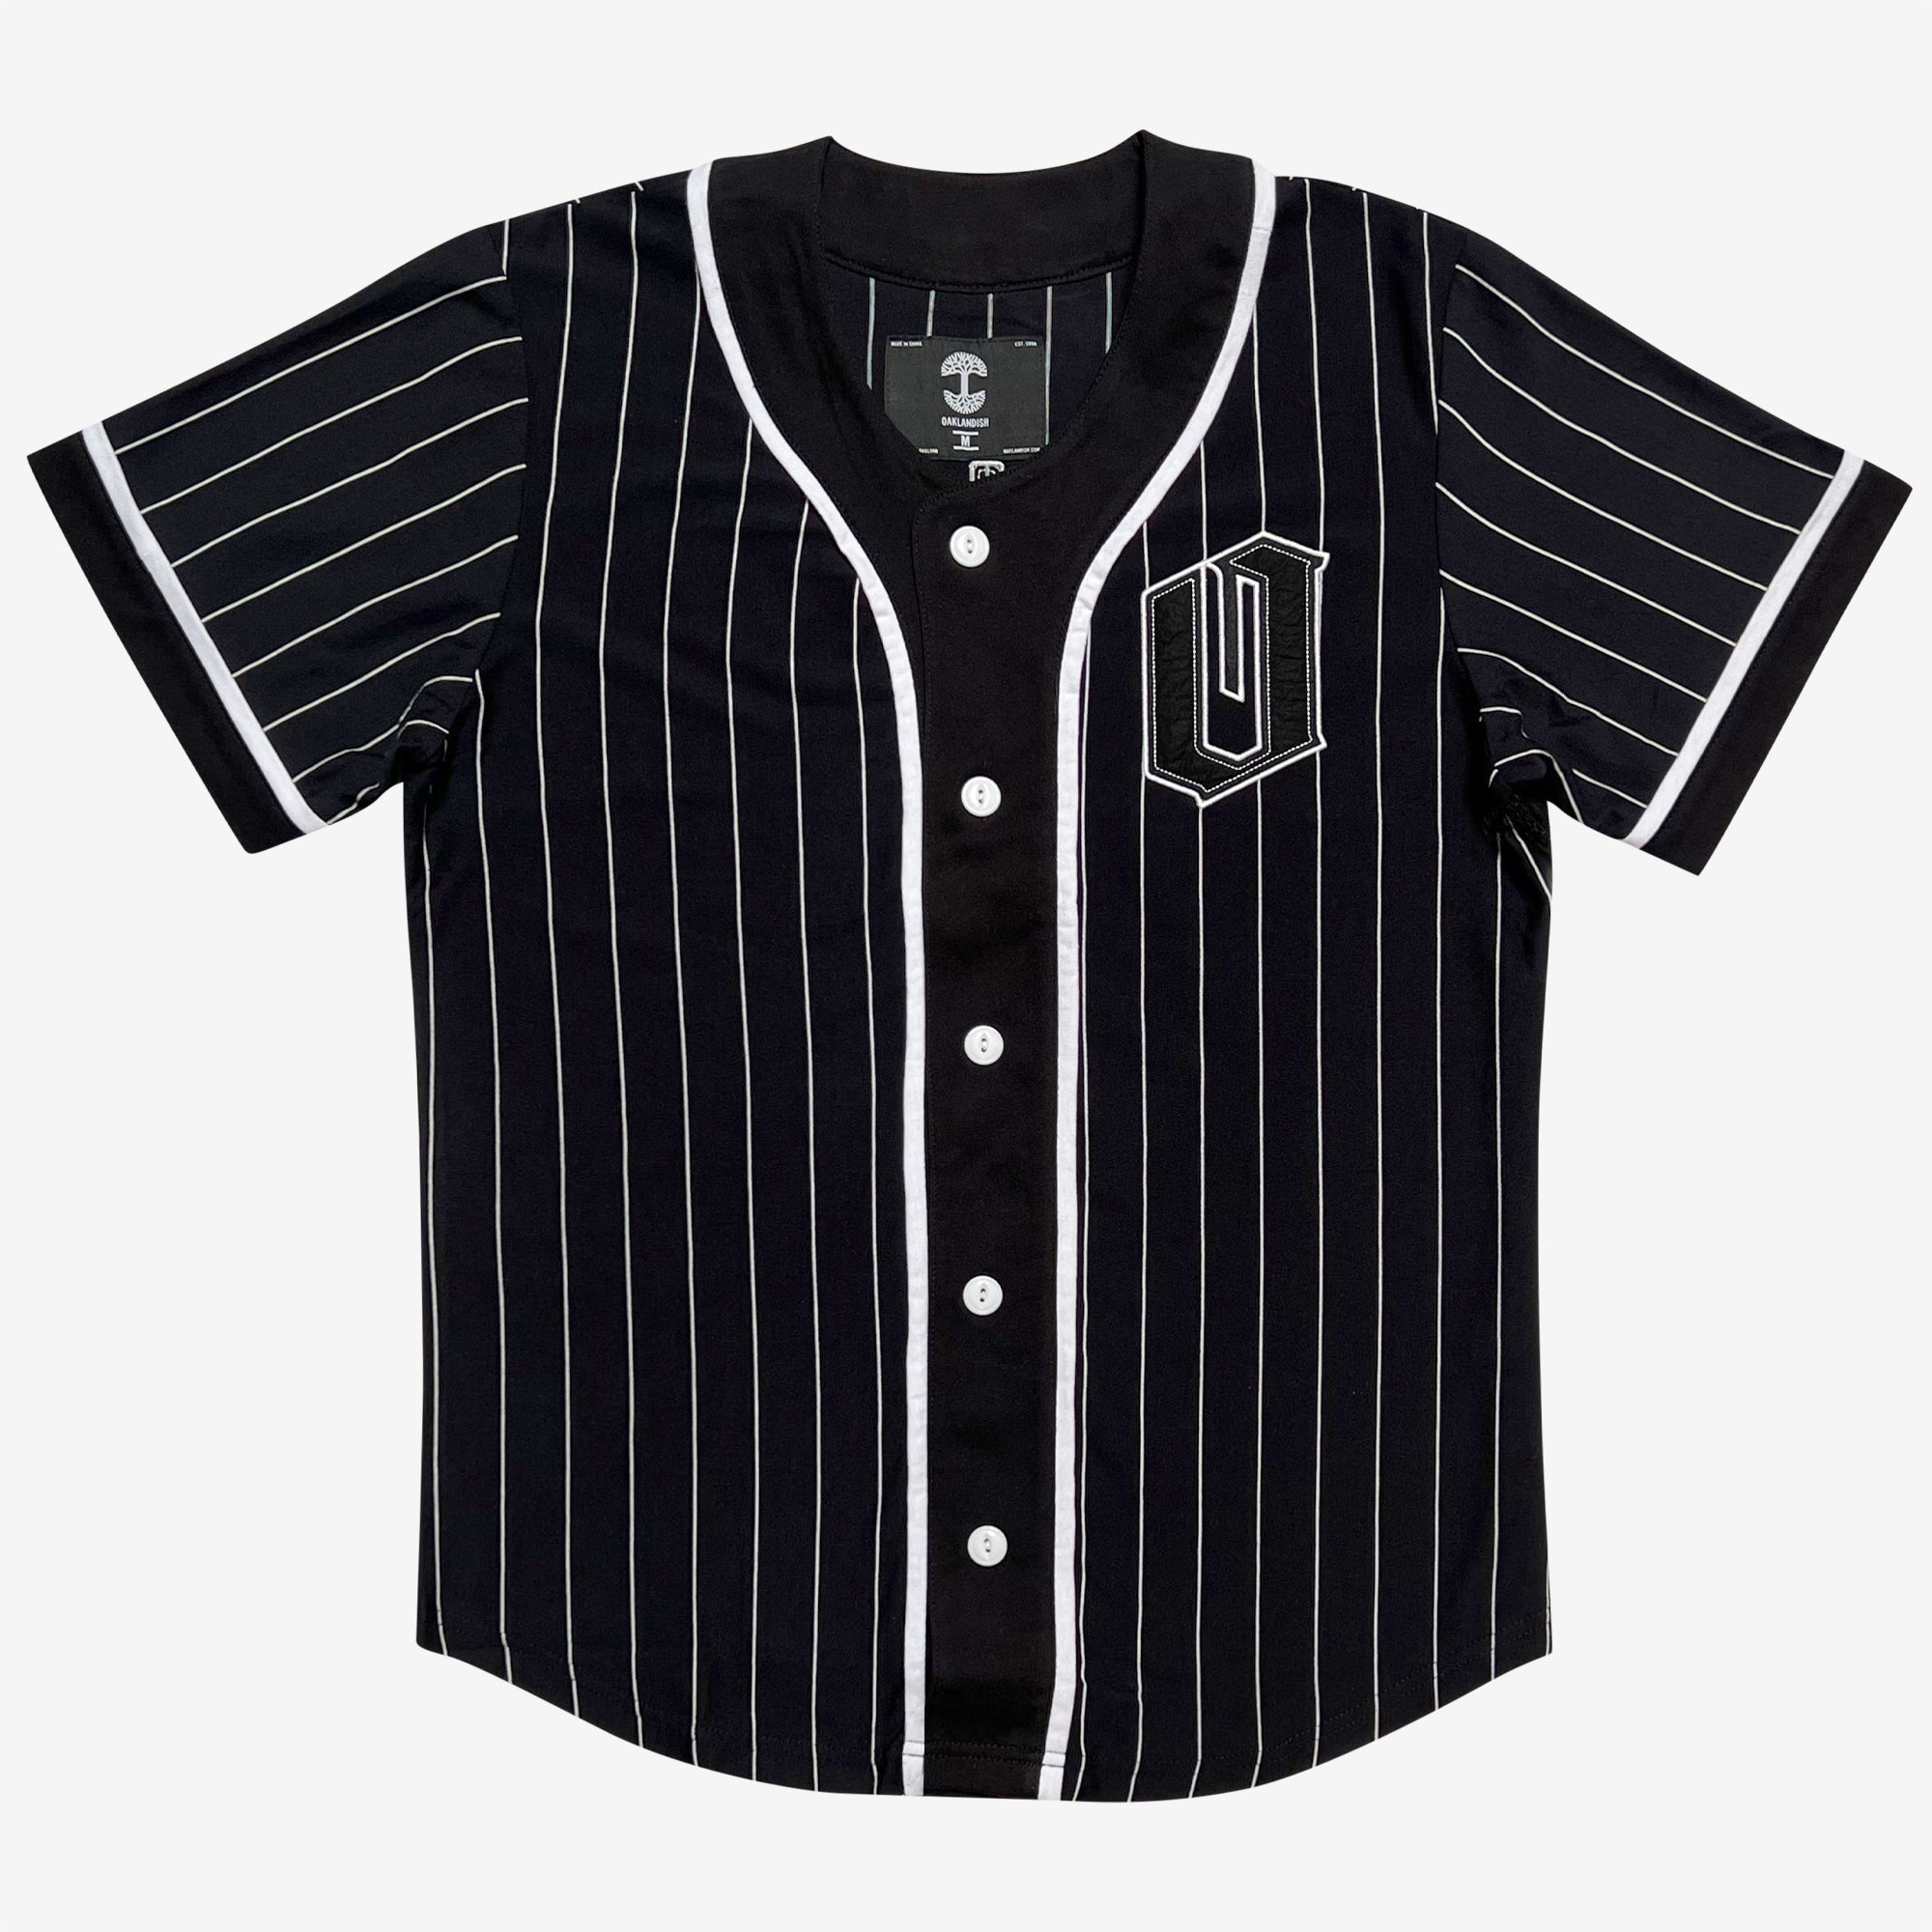 Baseball Jersey - Official Away, O for Oakland, Black & White X-Large / Black